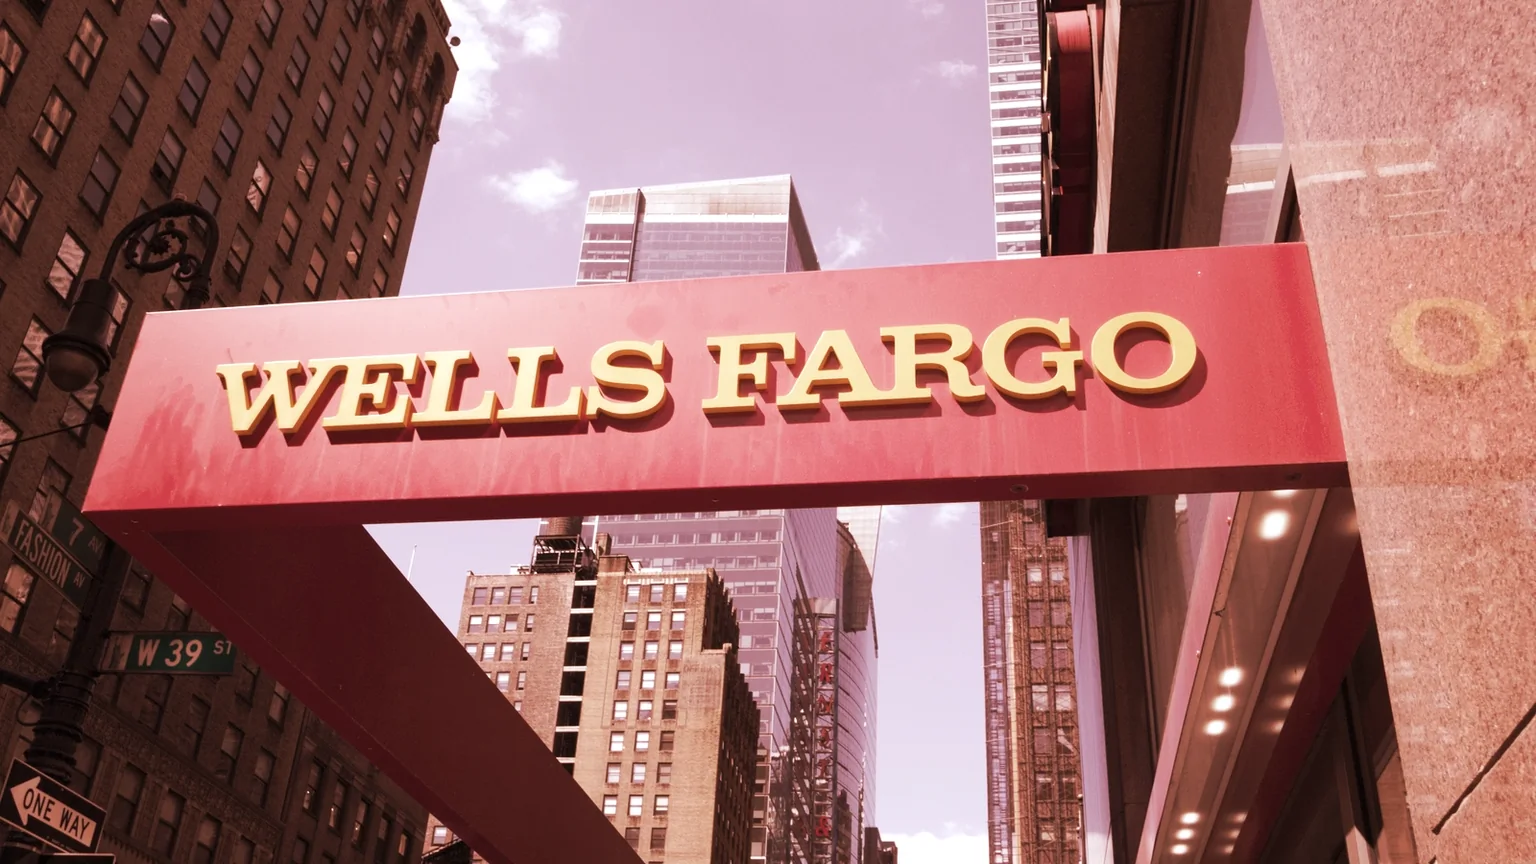 Wells Fargo Crypto Investment. Image: Shutterstock